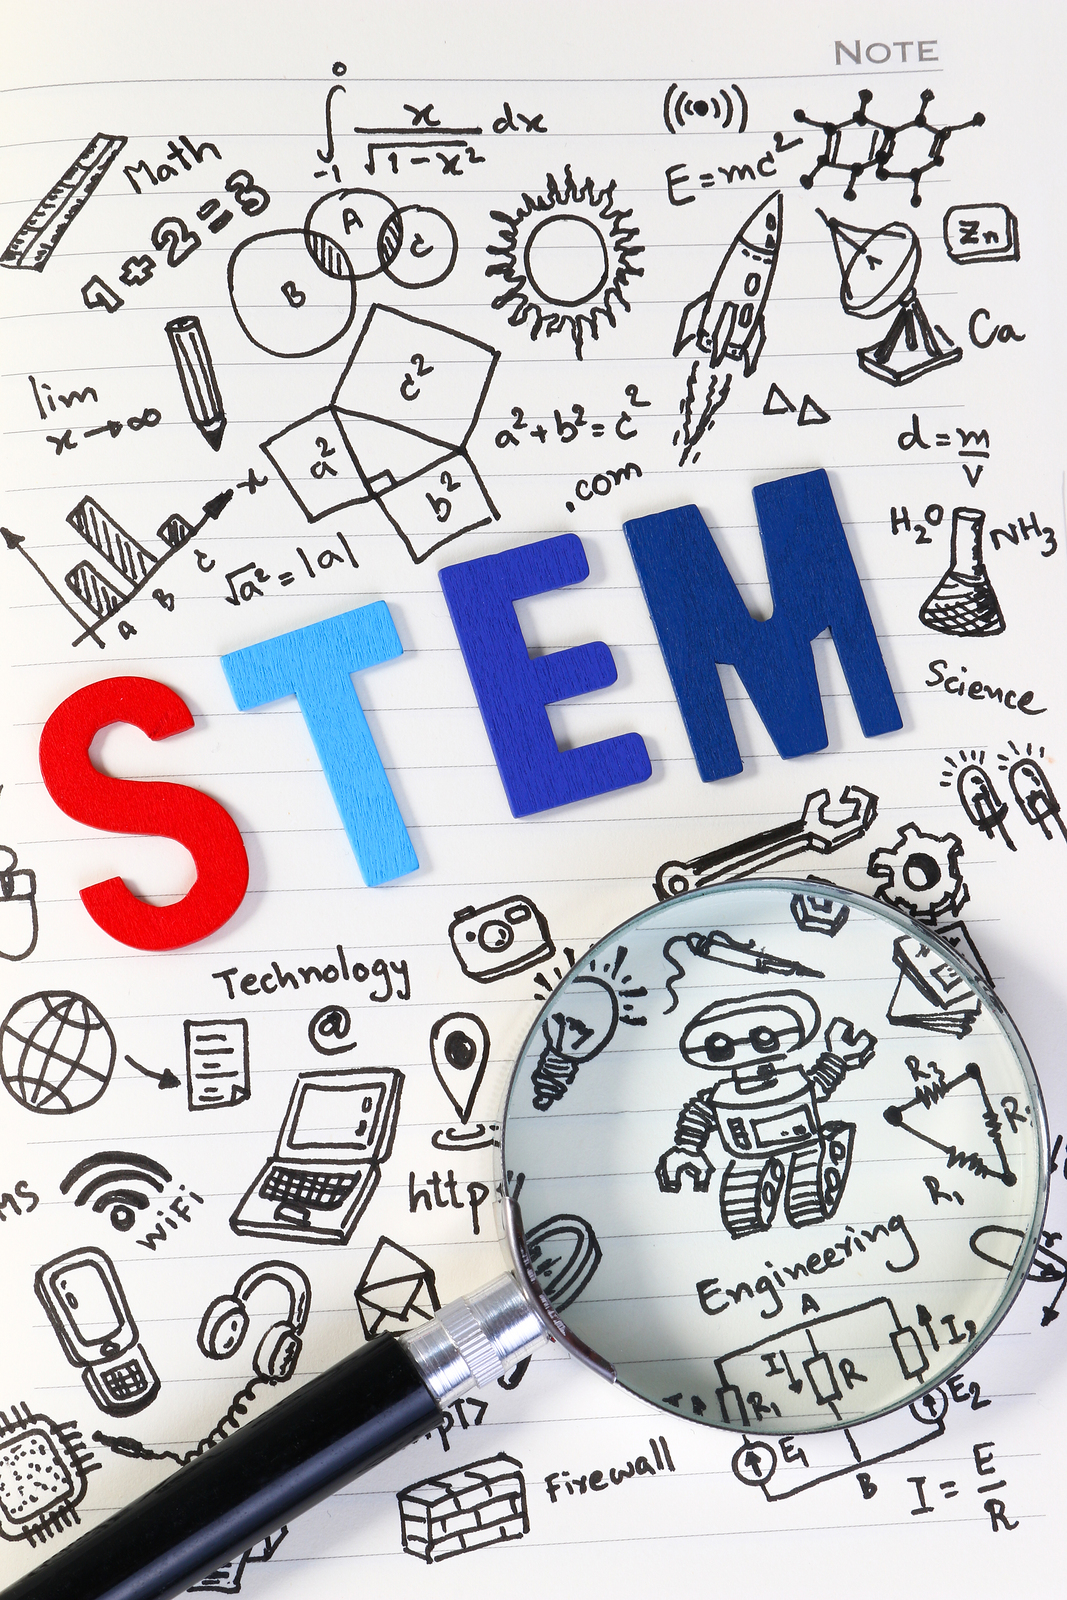 image depicting STEM education